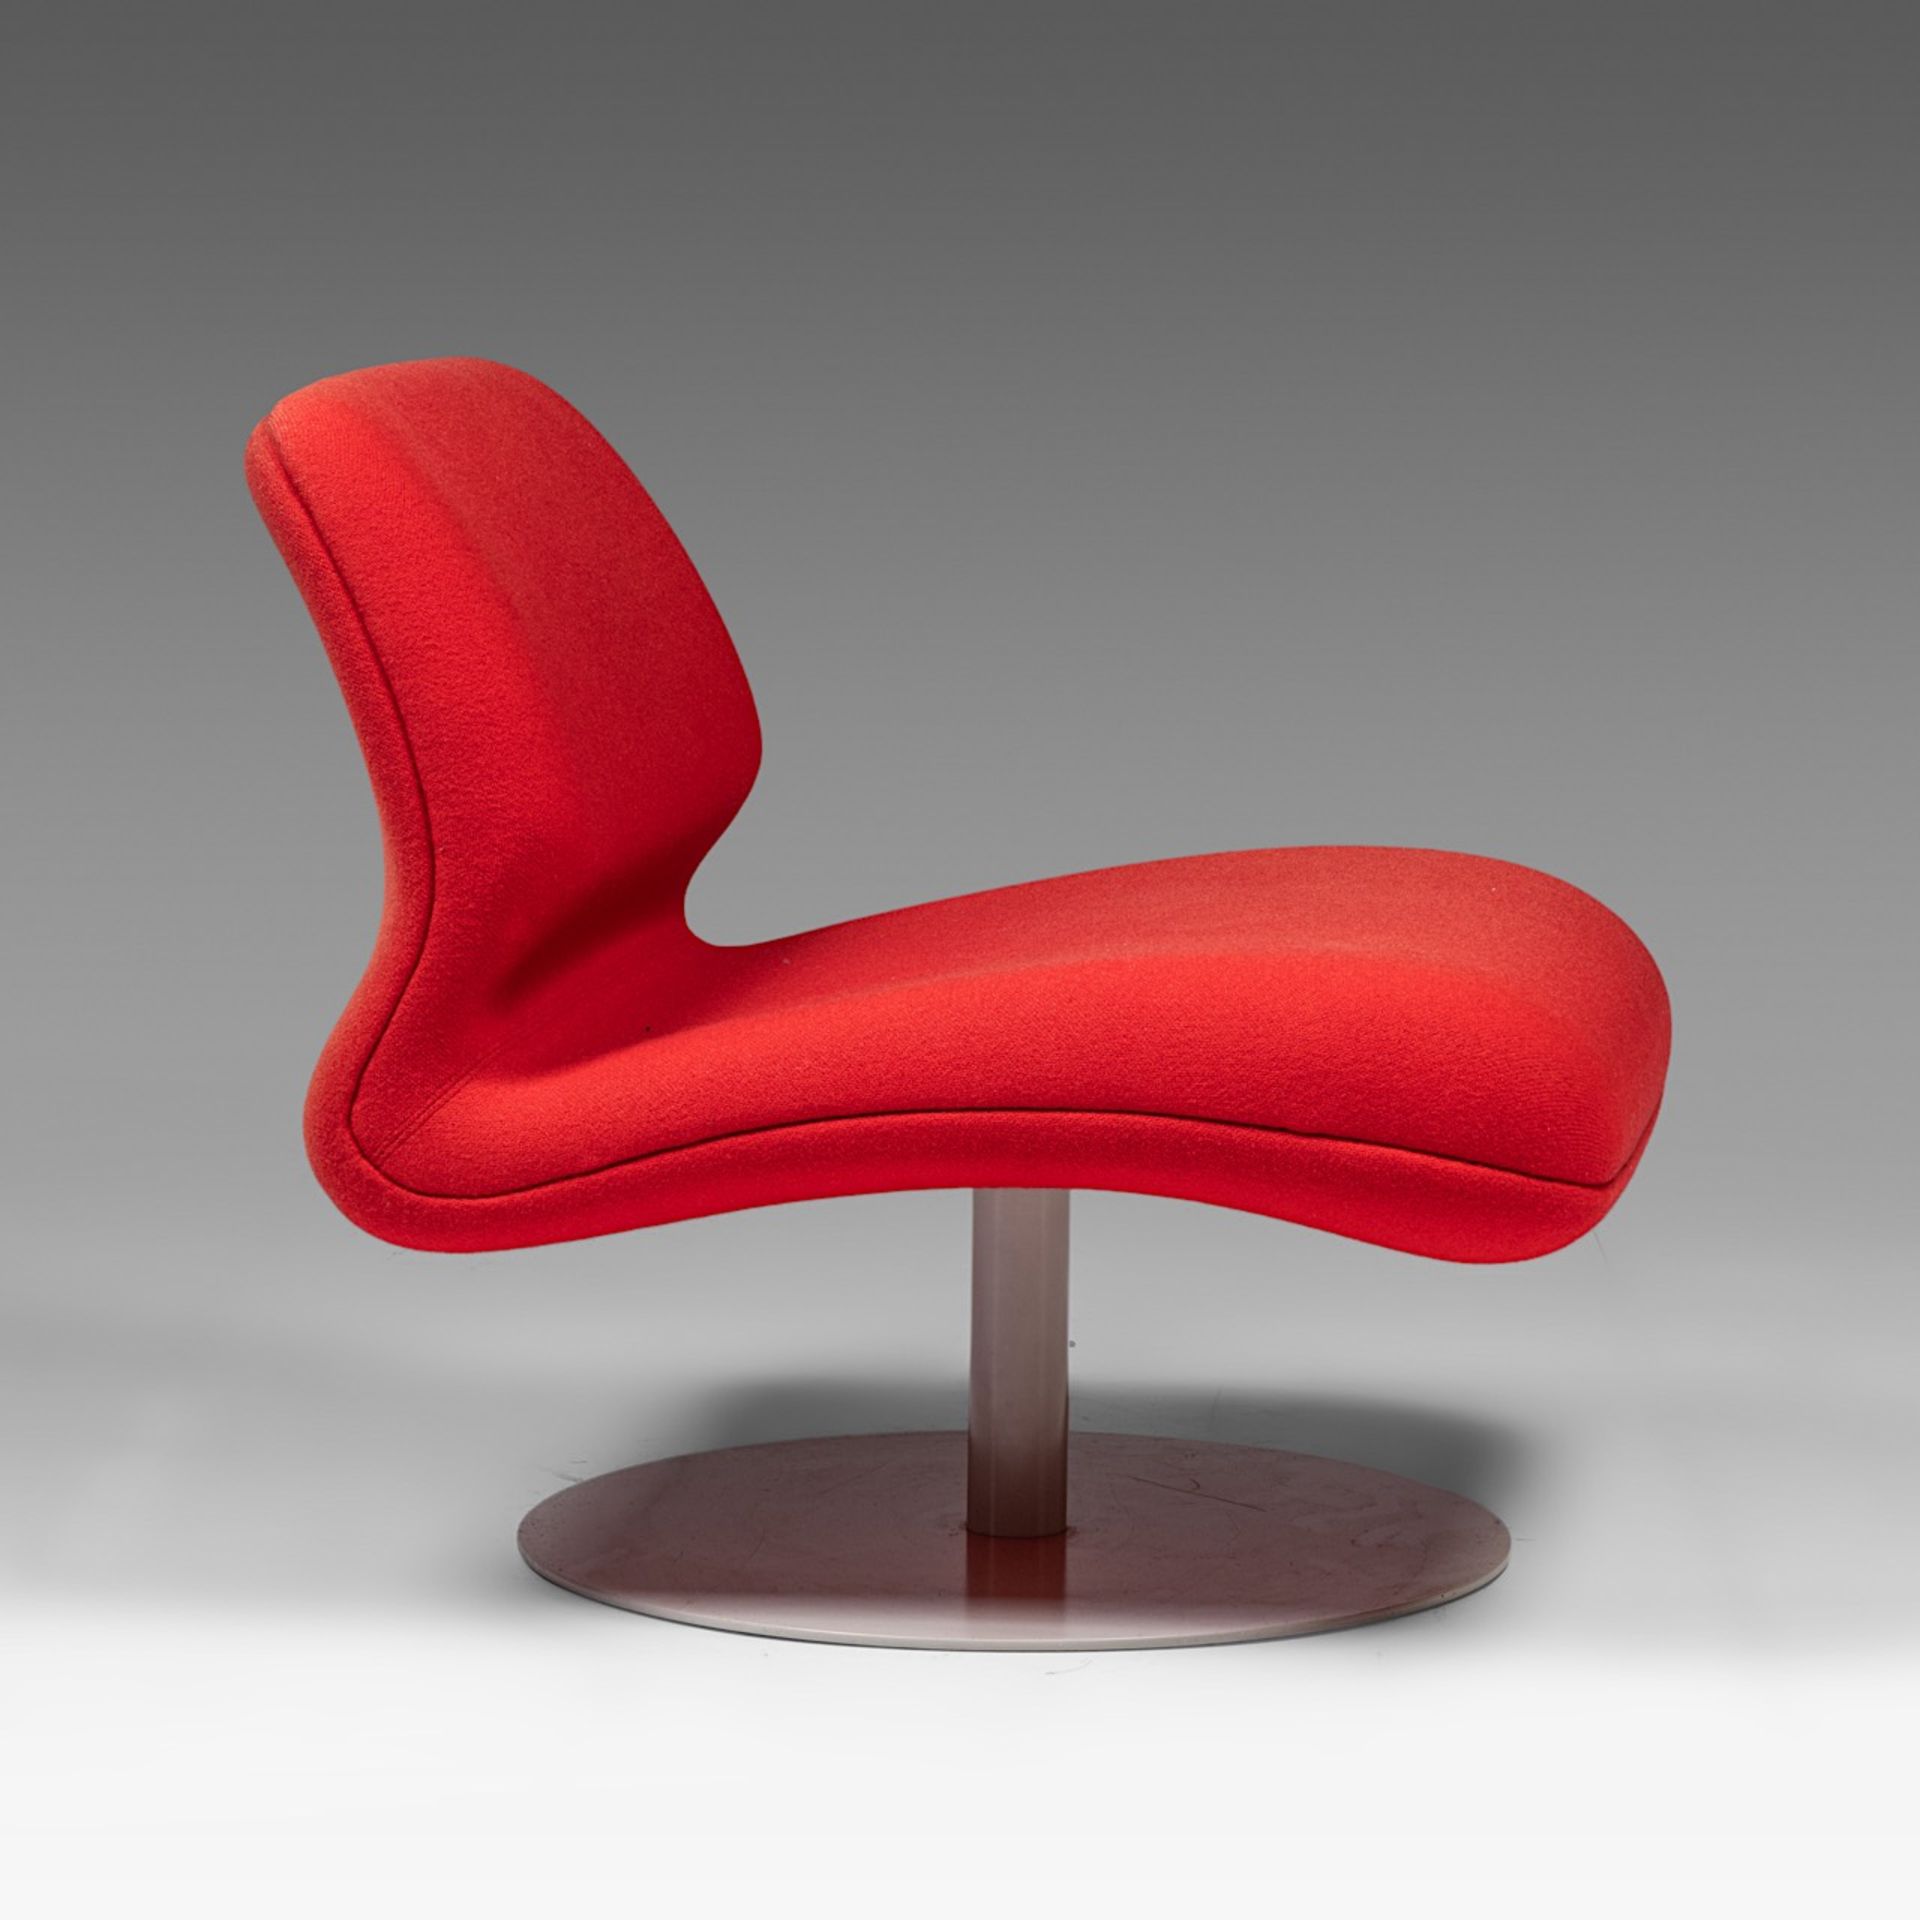 An 'Attitude' chair by Morten Voss for Fritz Hansen, Danmark, 2005, H 70 - W 65 cm - Image 4 of 10